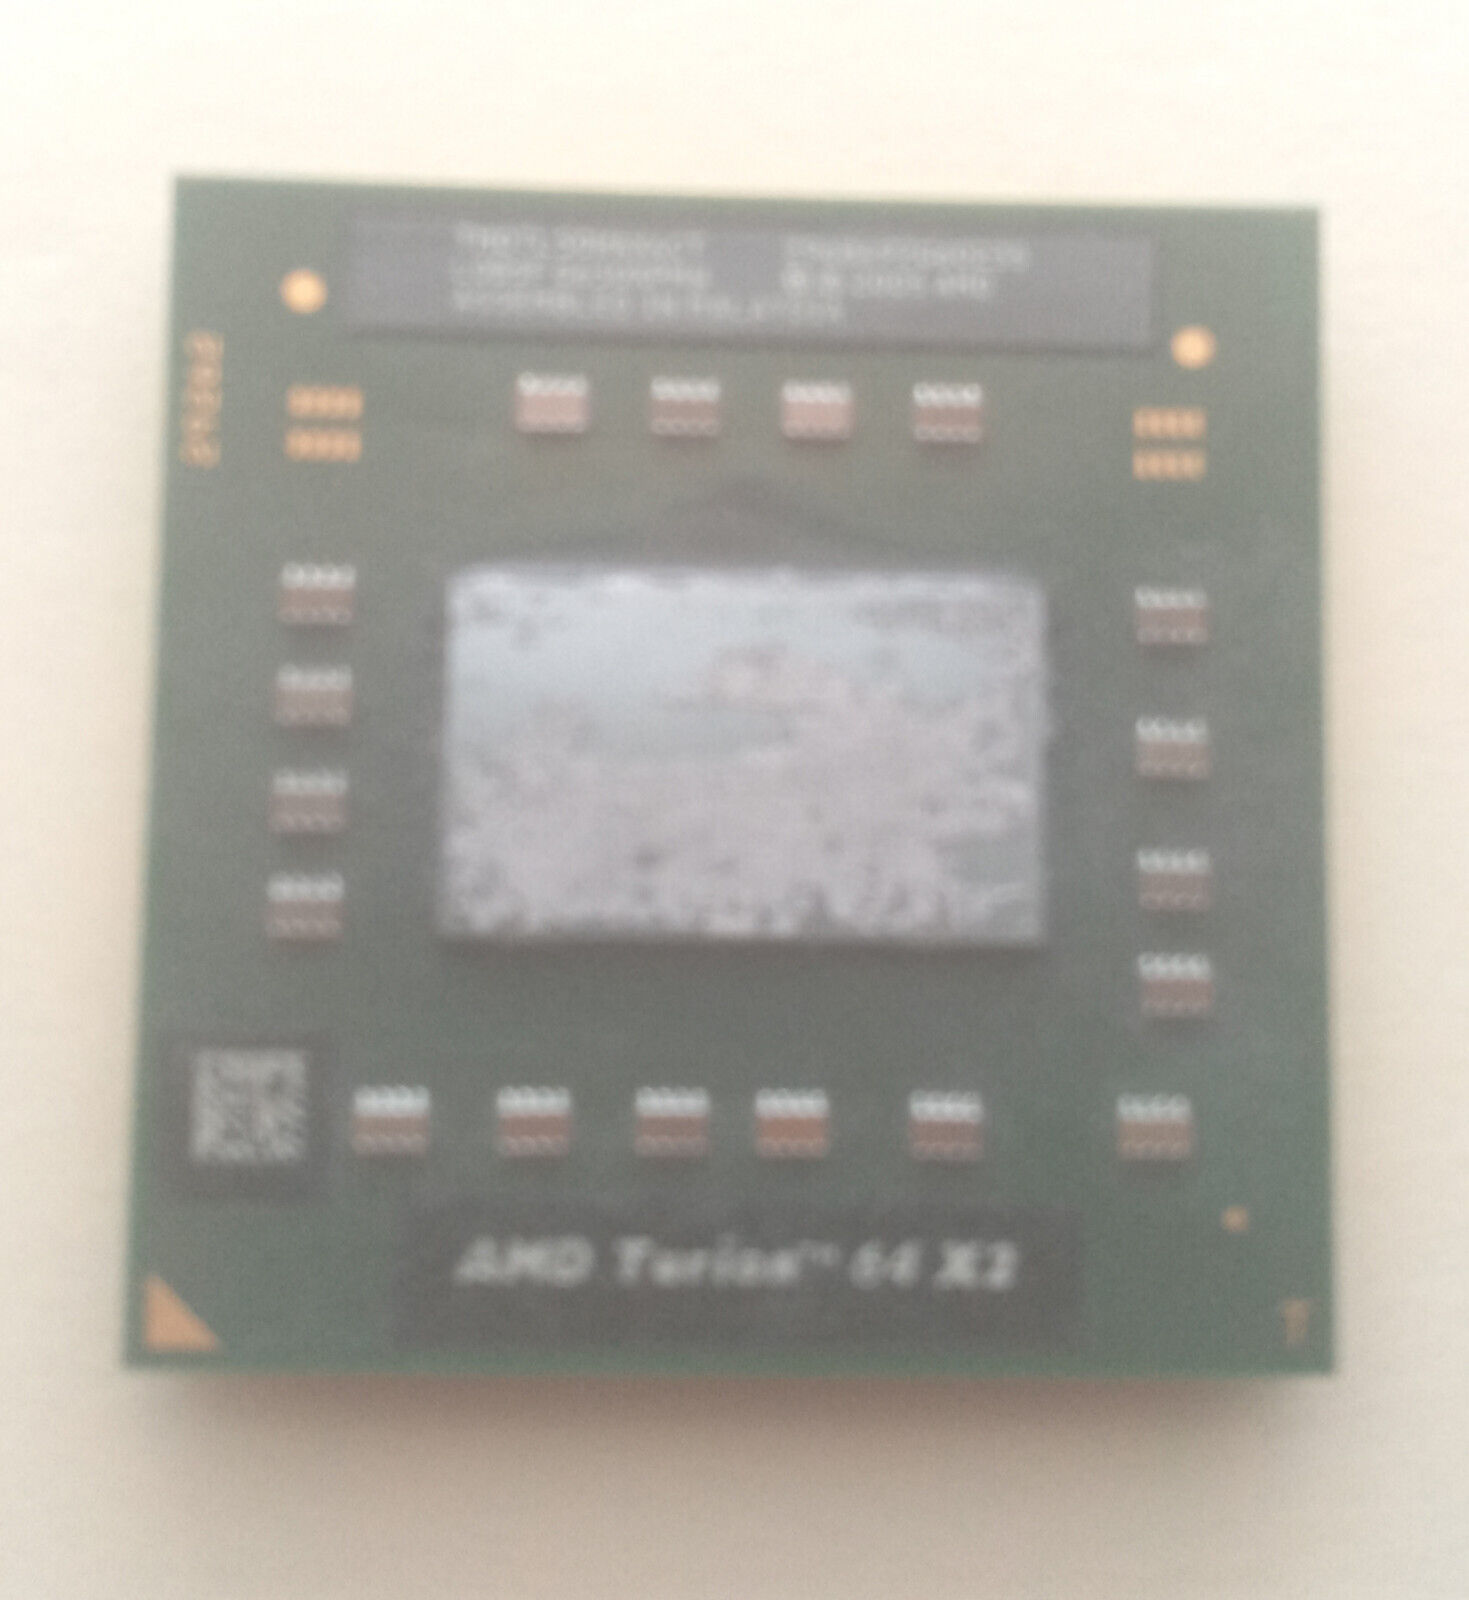 AMD Turion 64 X2 Acer 5100 Laptop CPU 1600 MHz - $12.00